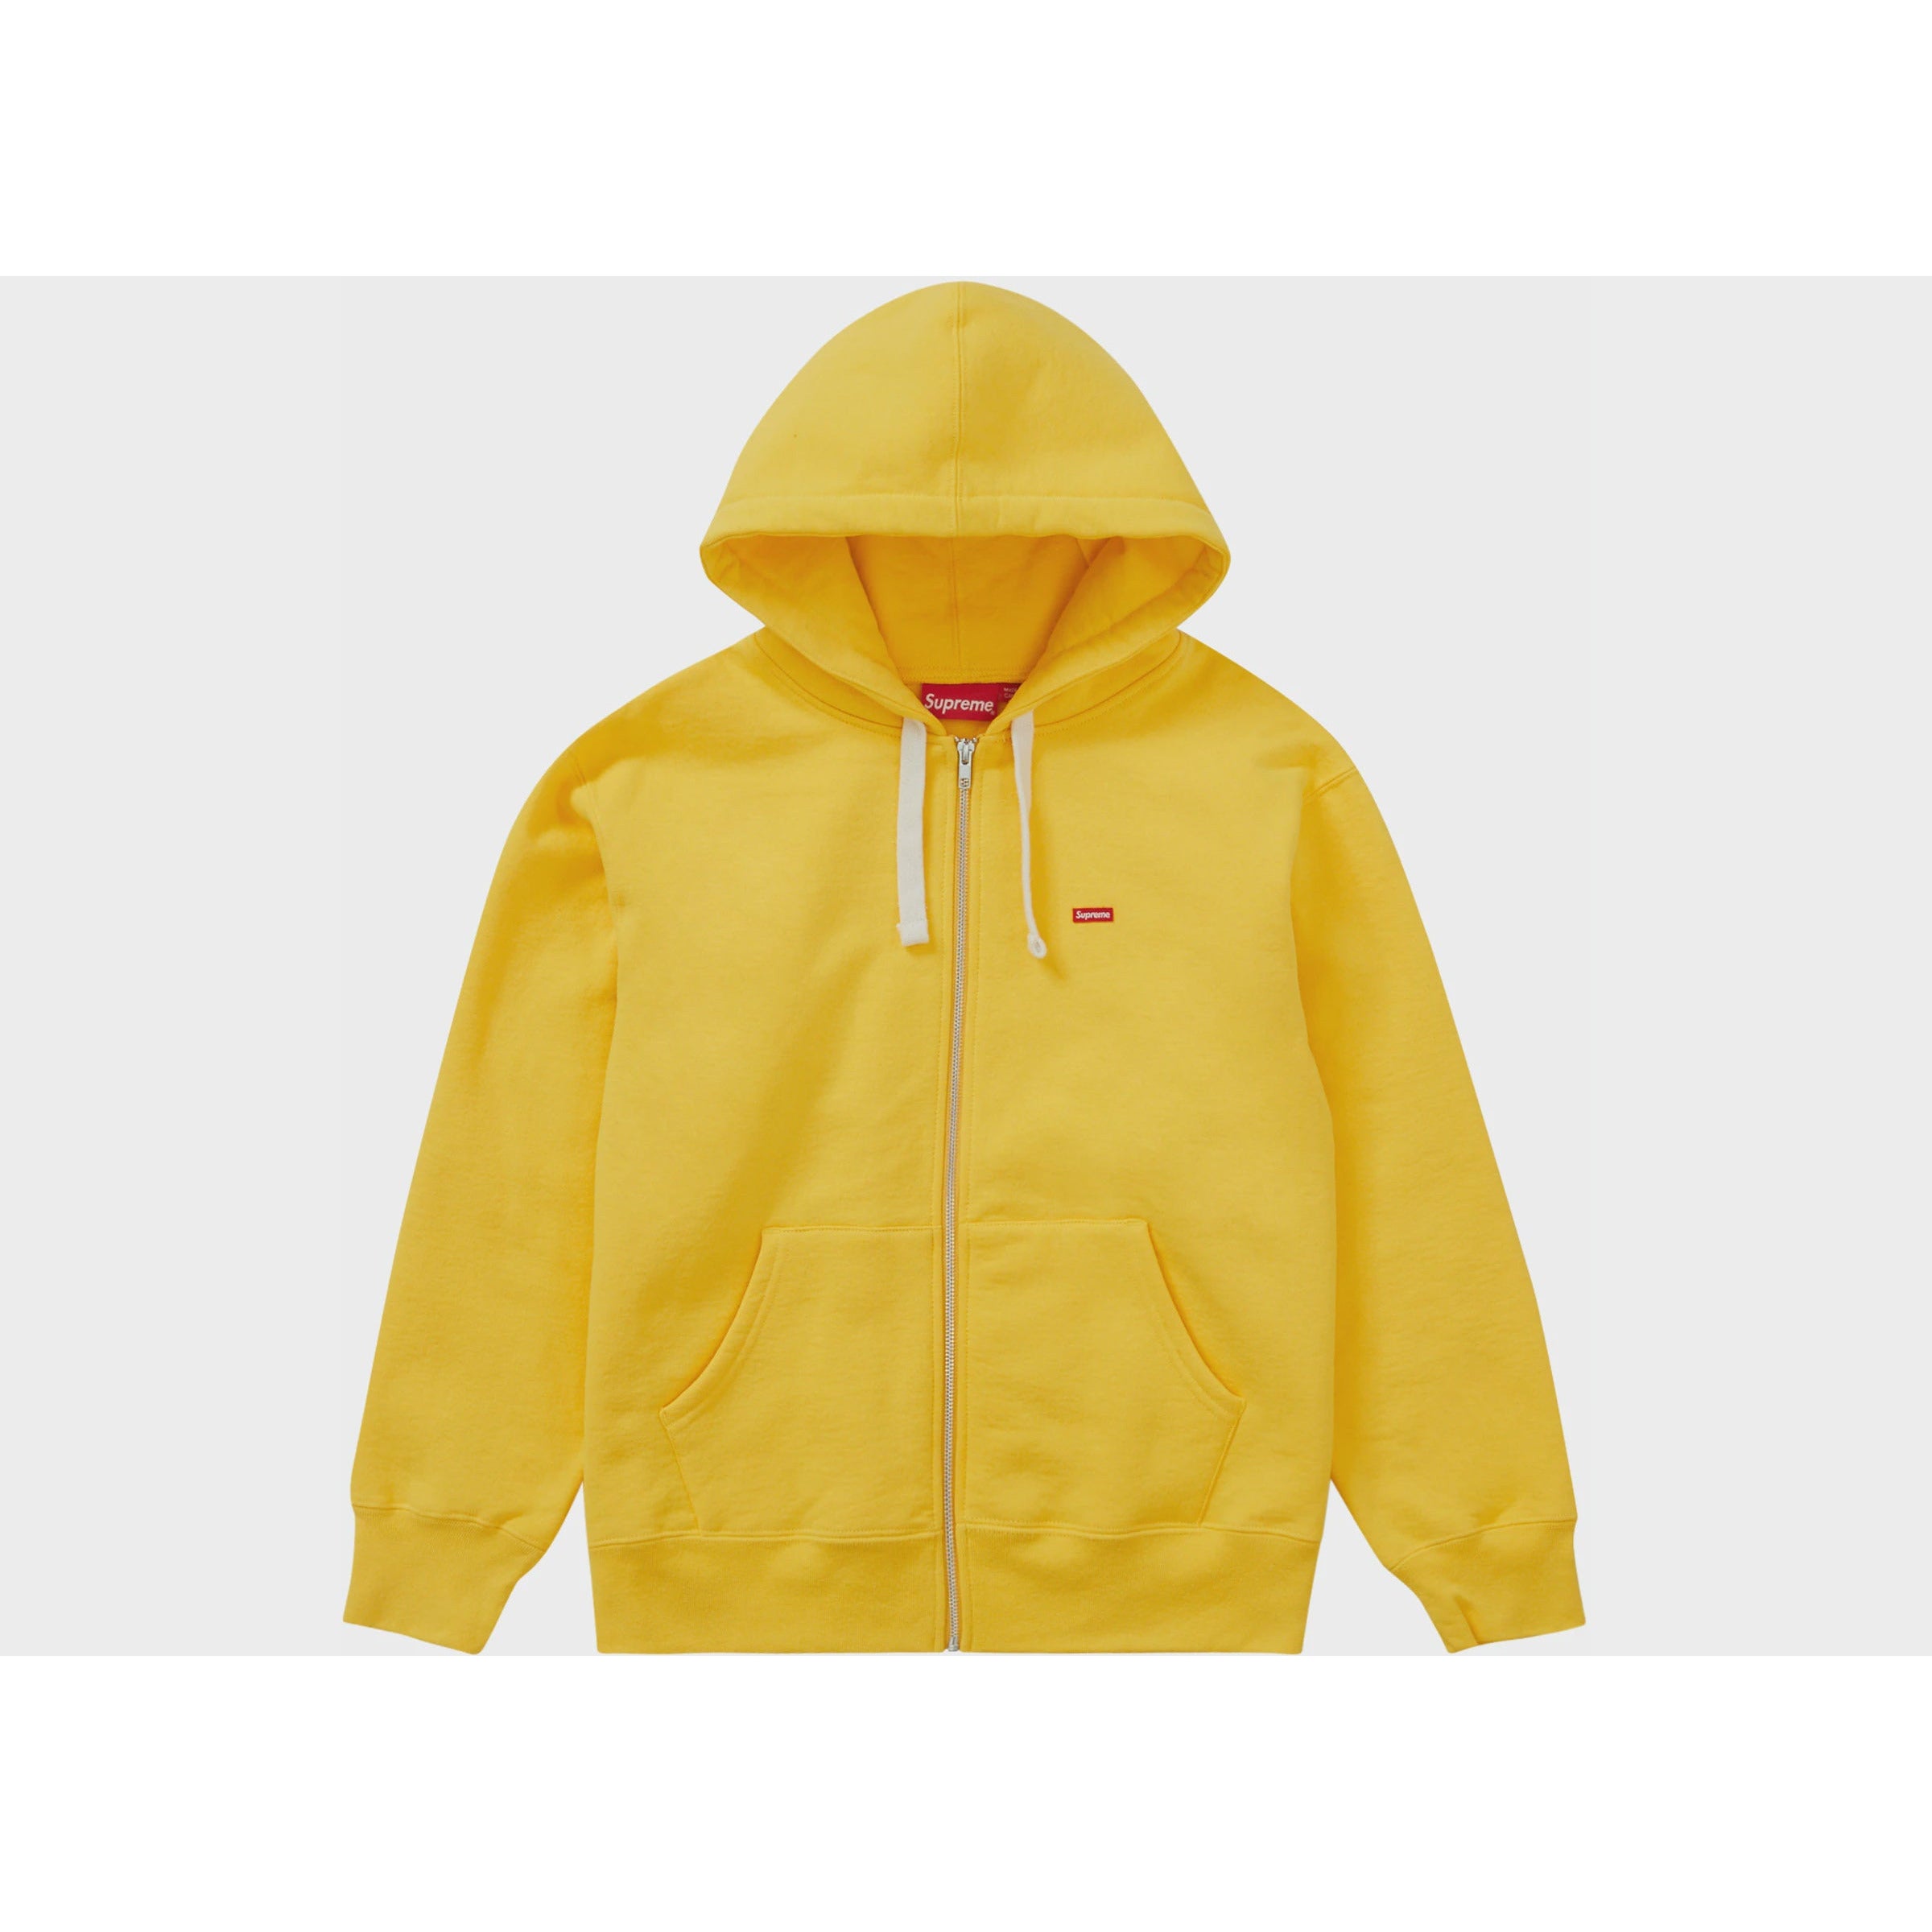 Supreme Small Box Drawcord Zip Up Hooded Sweatshirt - Yellow